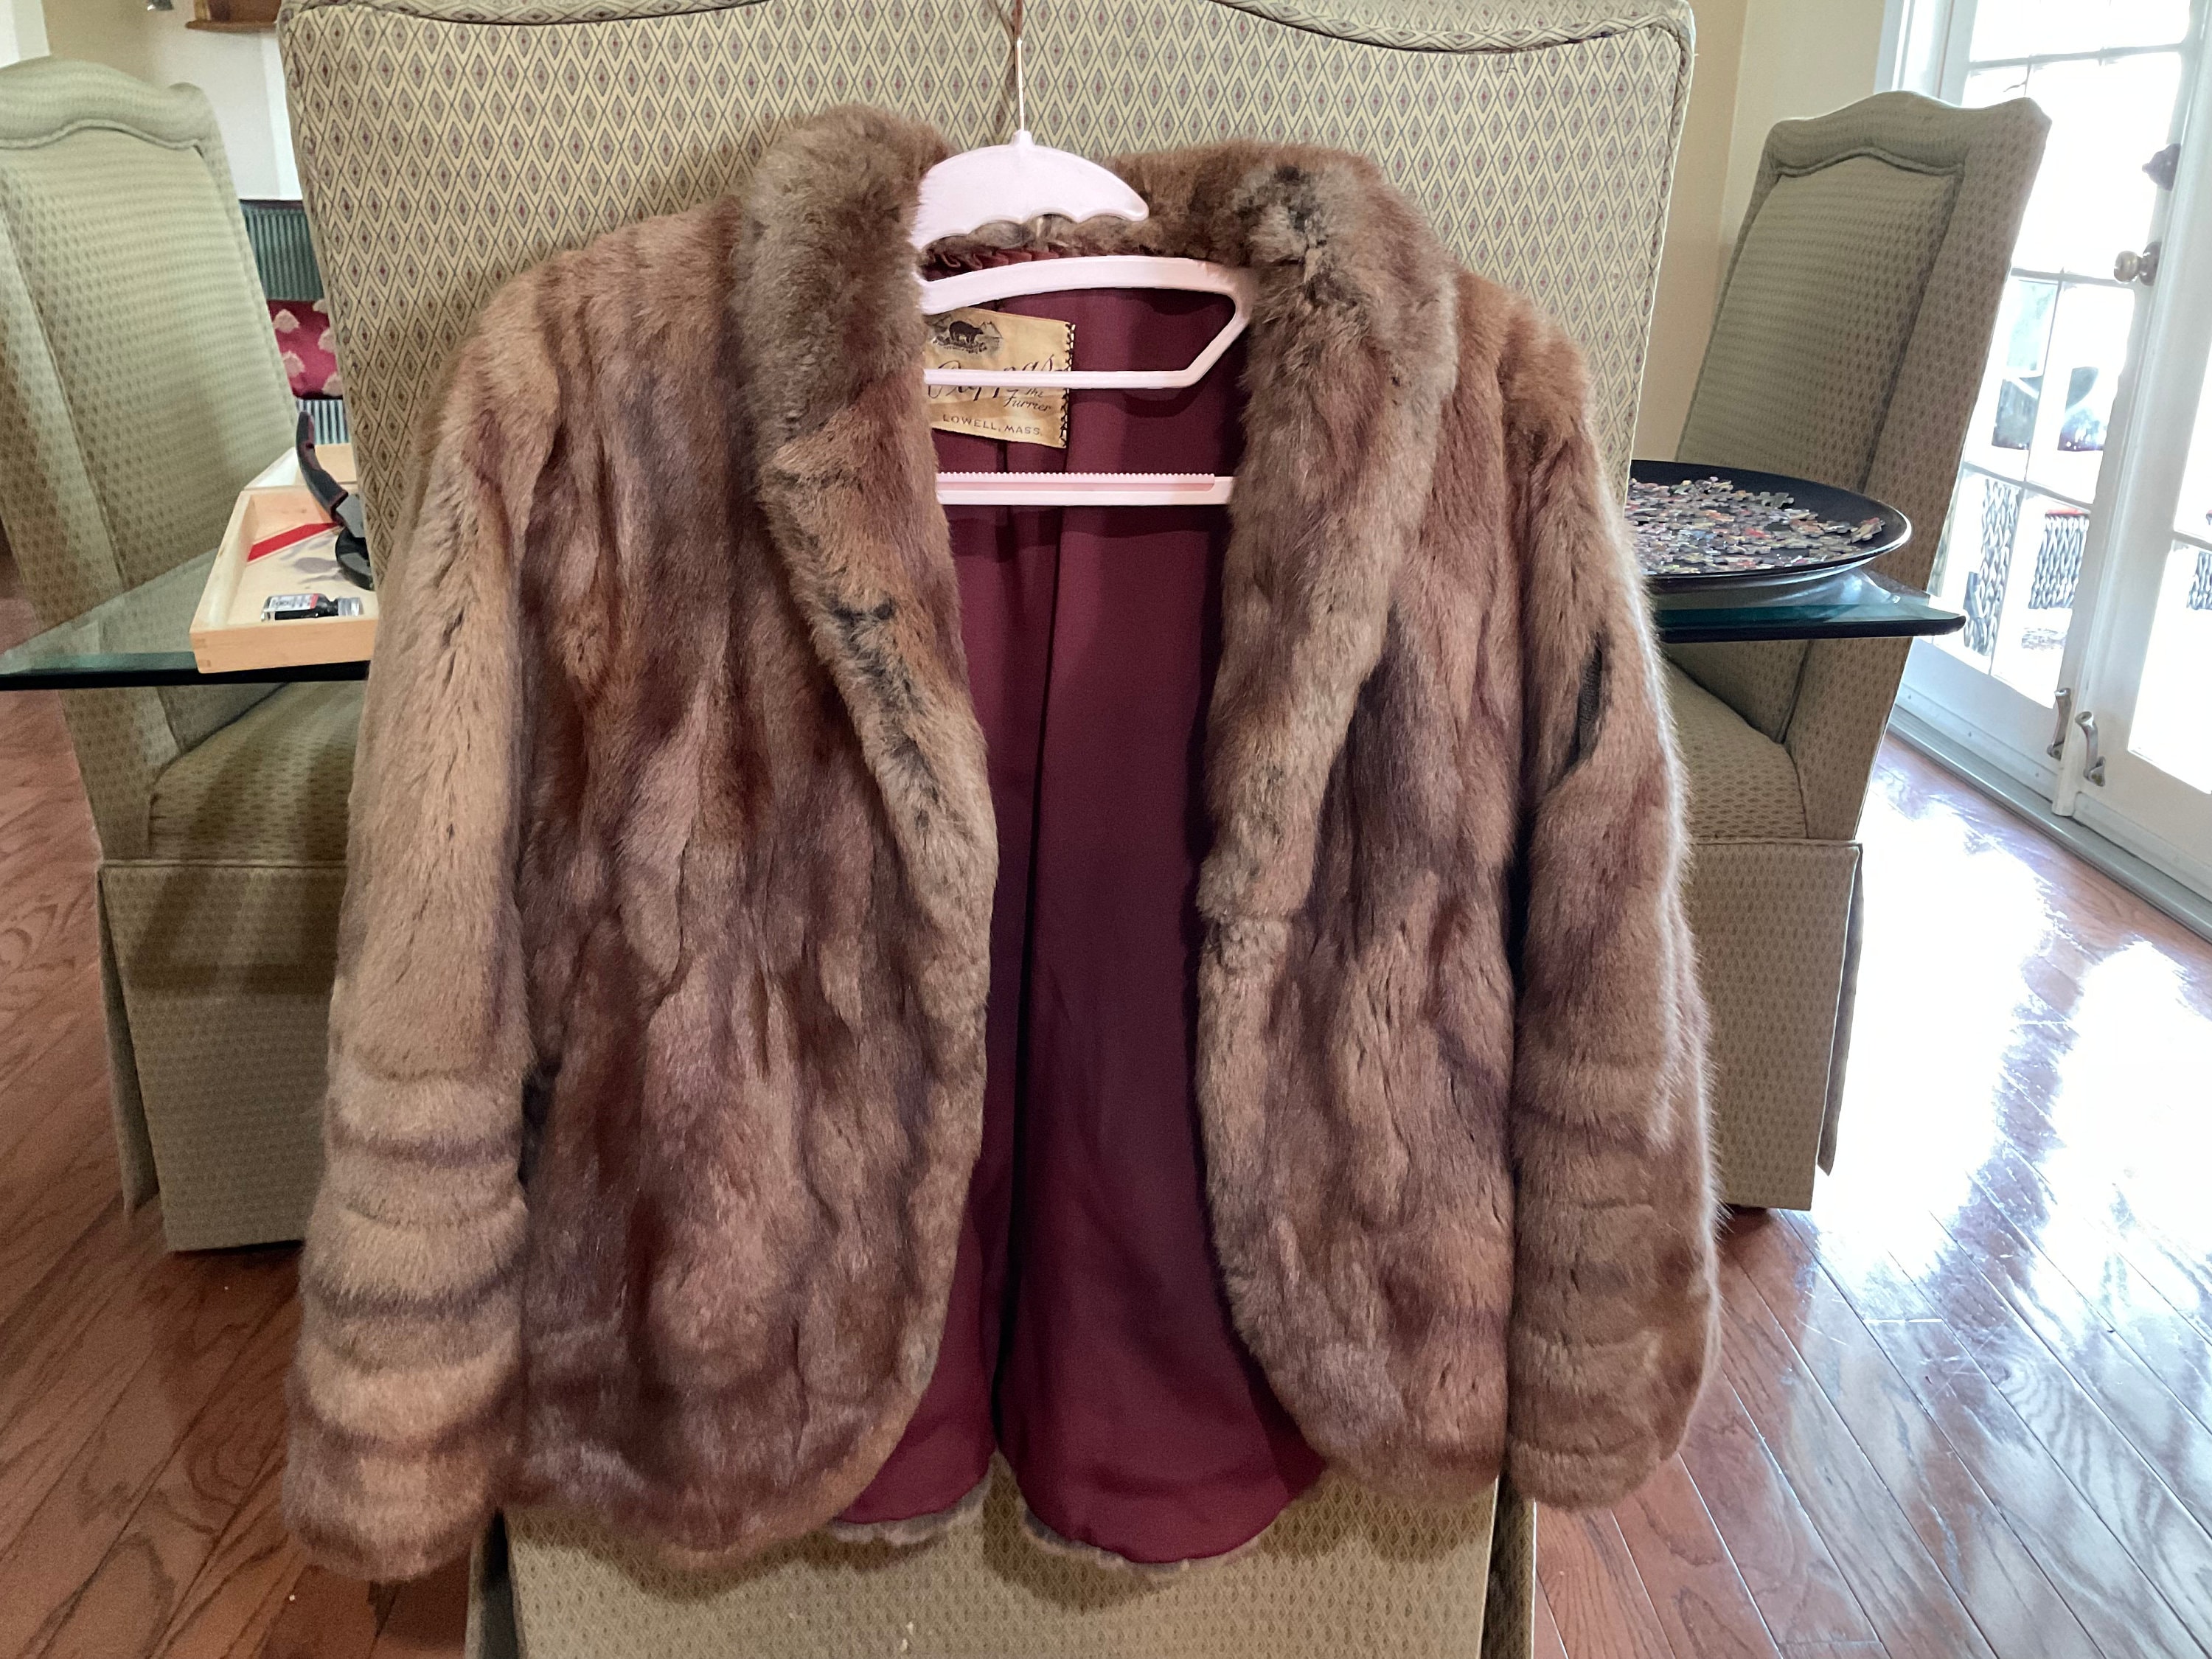 Mink fur jacket round wide collar and sleeve 3/4 honey - Furriers online